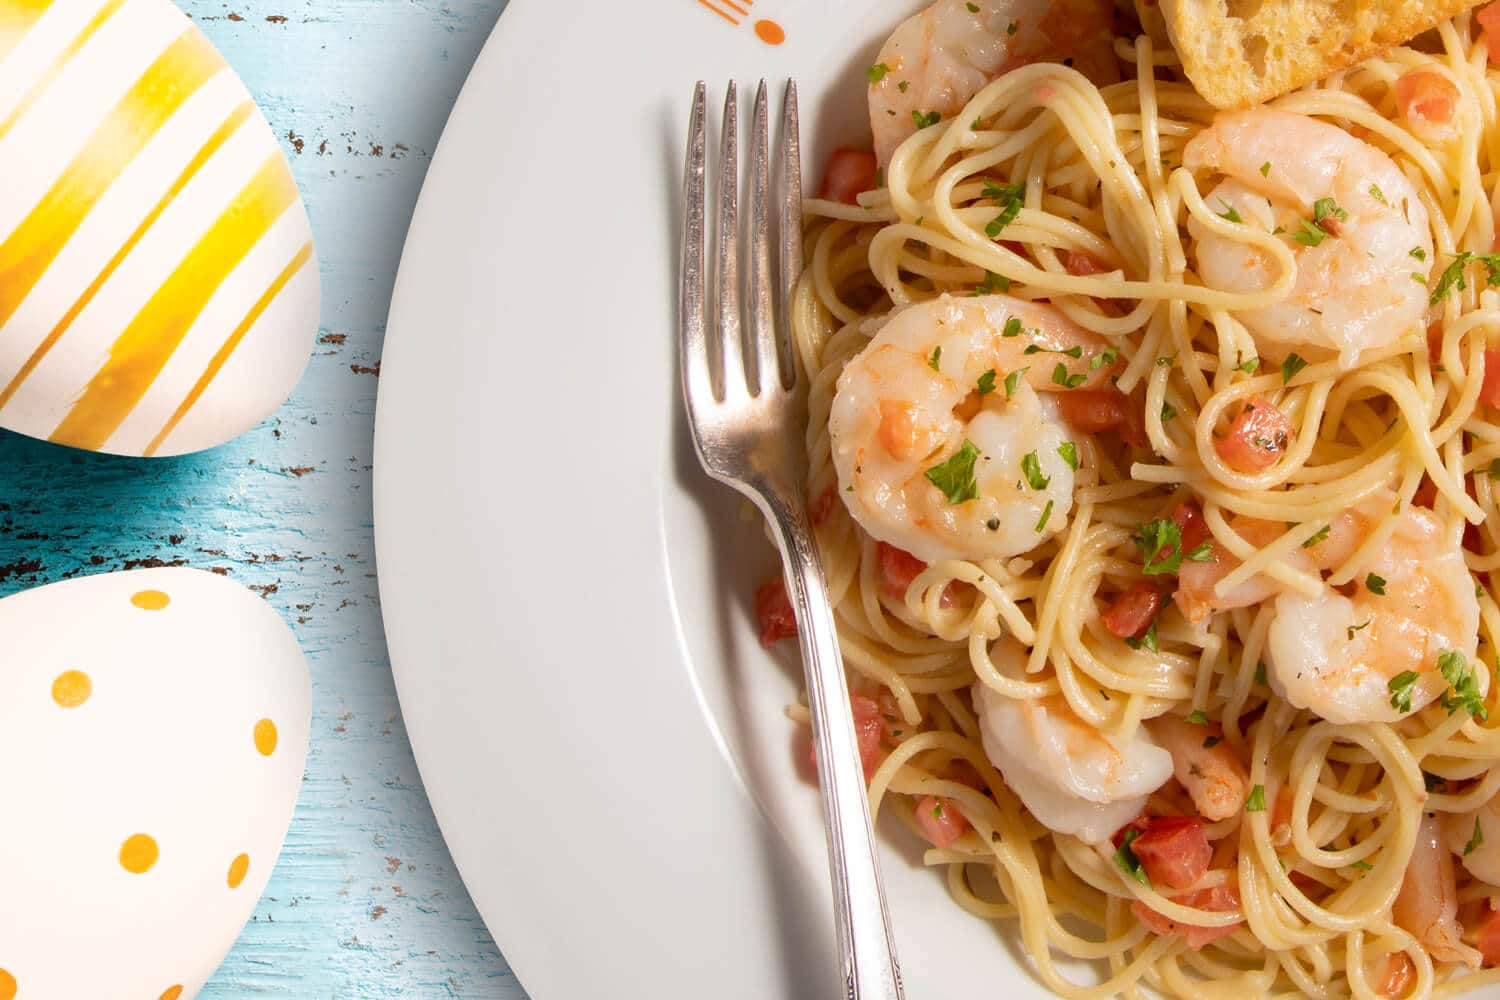 Bravo easter shrimp pasta plate with easter egg background